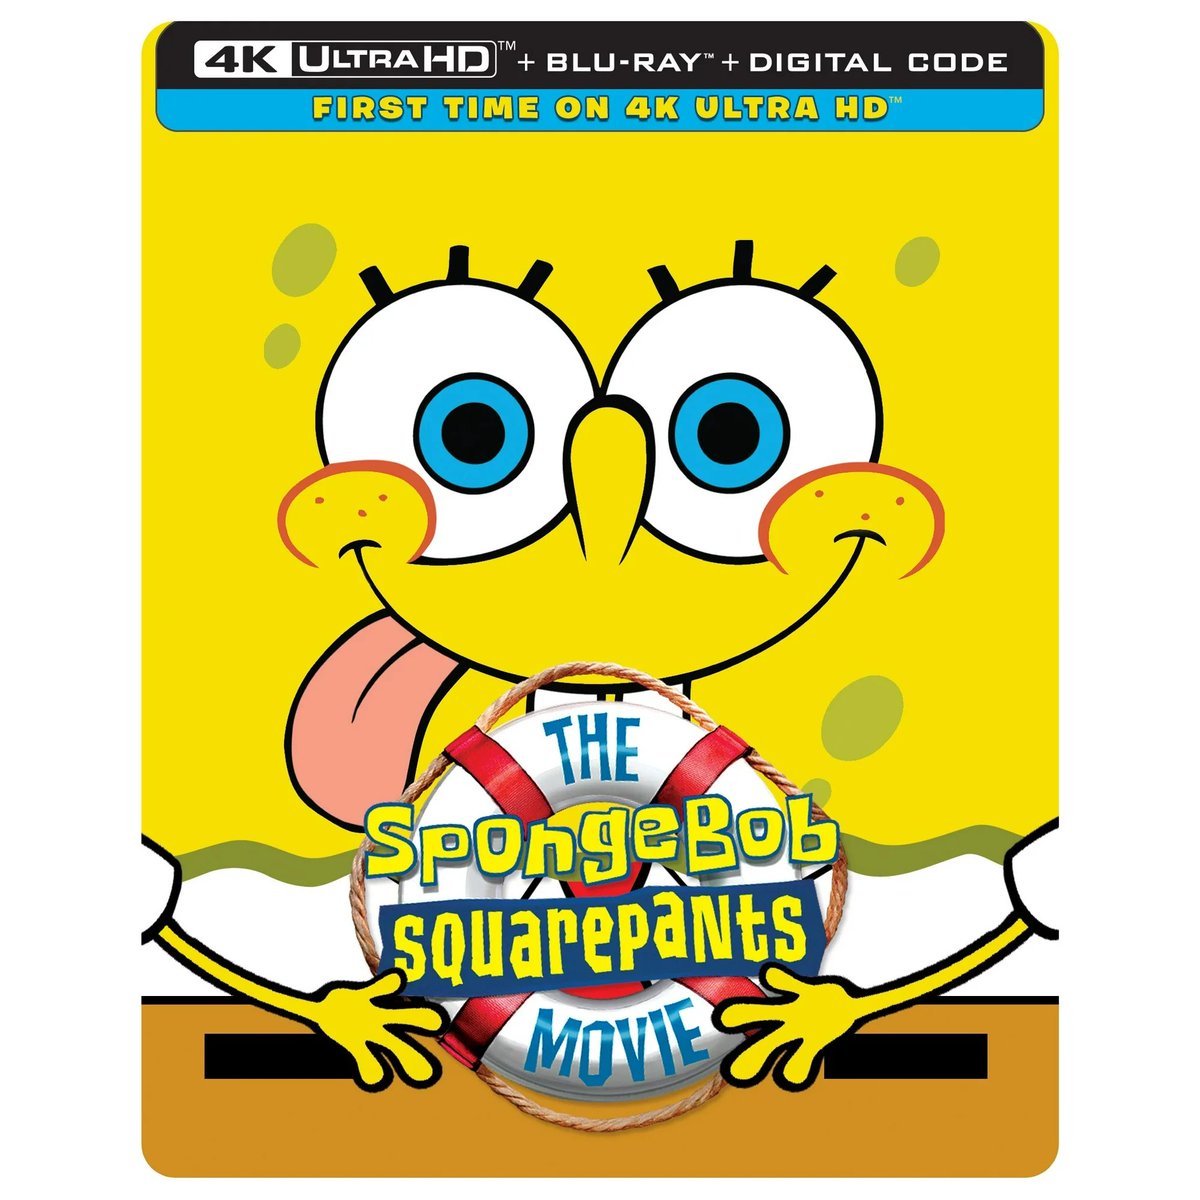 Preorder Spongebob Squarepants 4k Steelbook up at Amazon #ad 
amzn.to/3yjTC0x

#spongebob #spongebobsquarepants #spongebobmovie